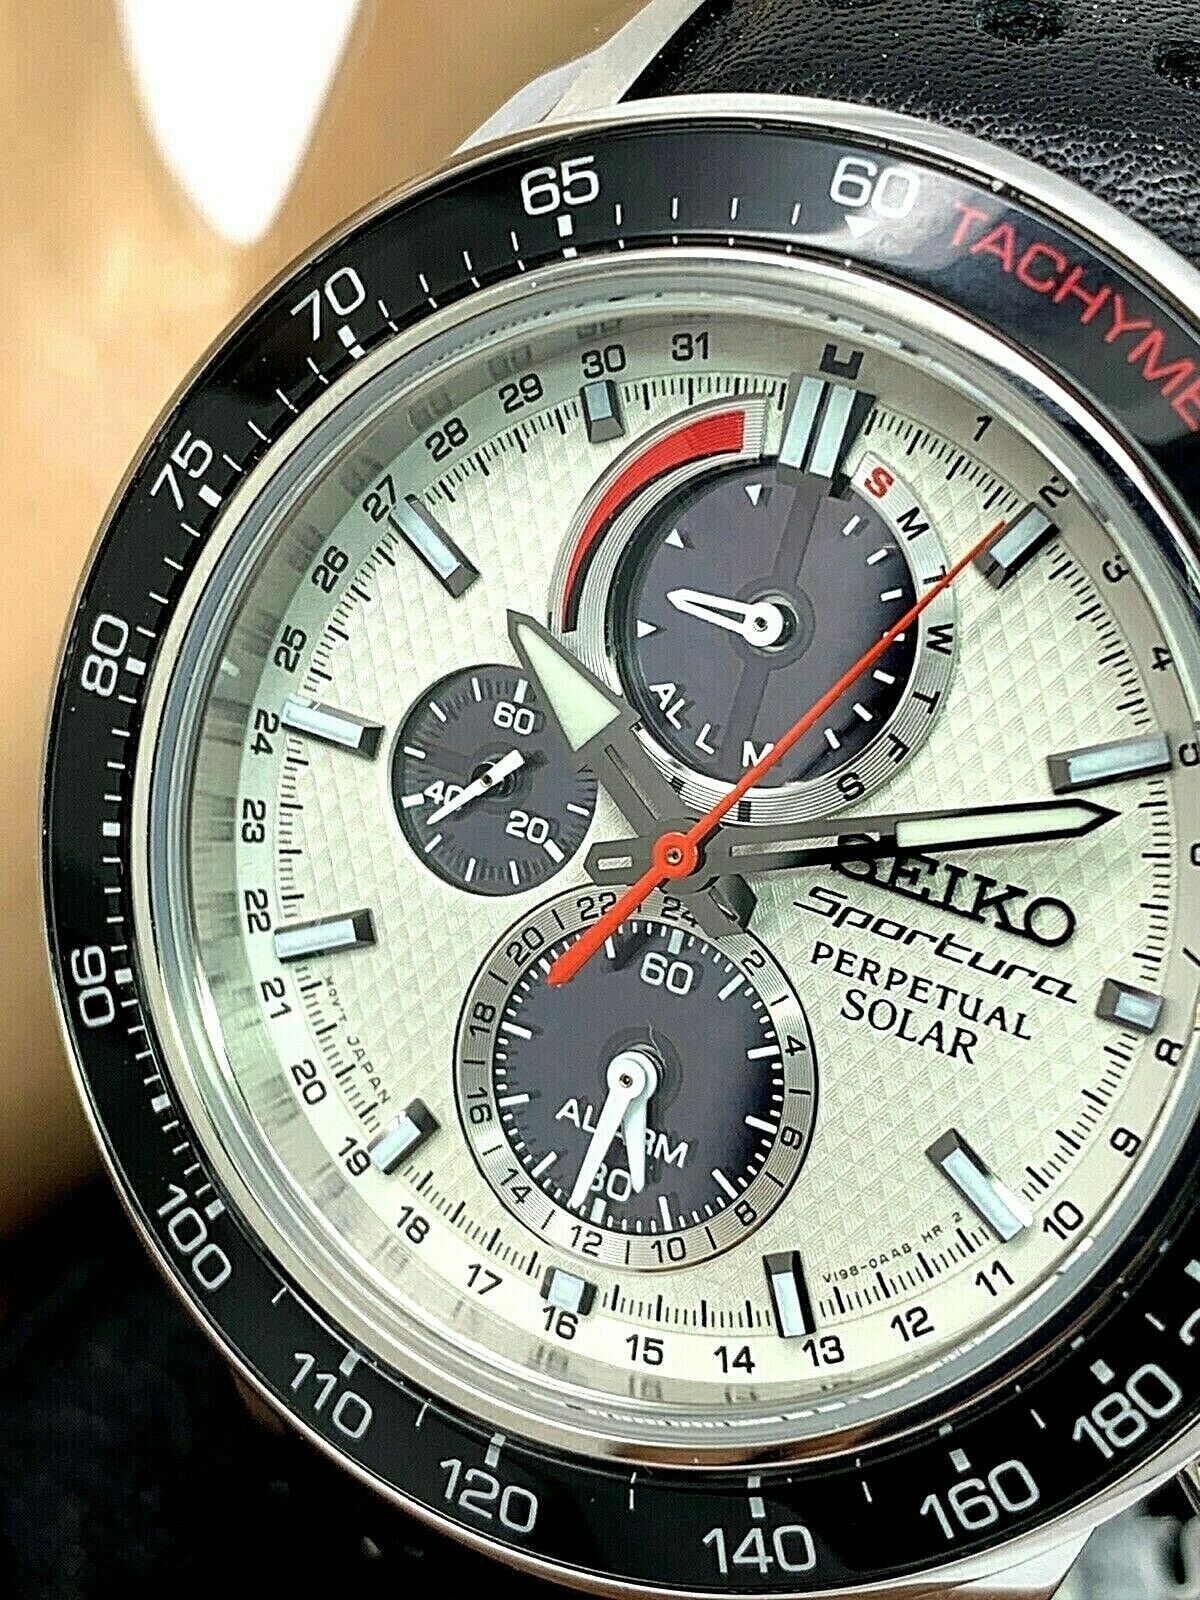 Seiko Men's Watch SSC359 Sportura Solar Perpetual Alarm Chronograph | WatchCharts